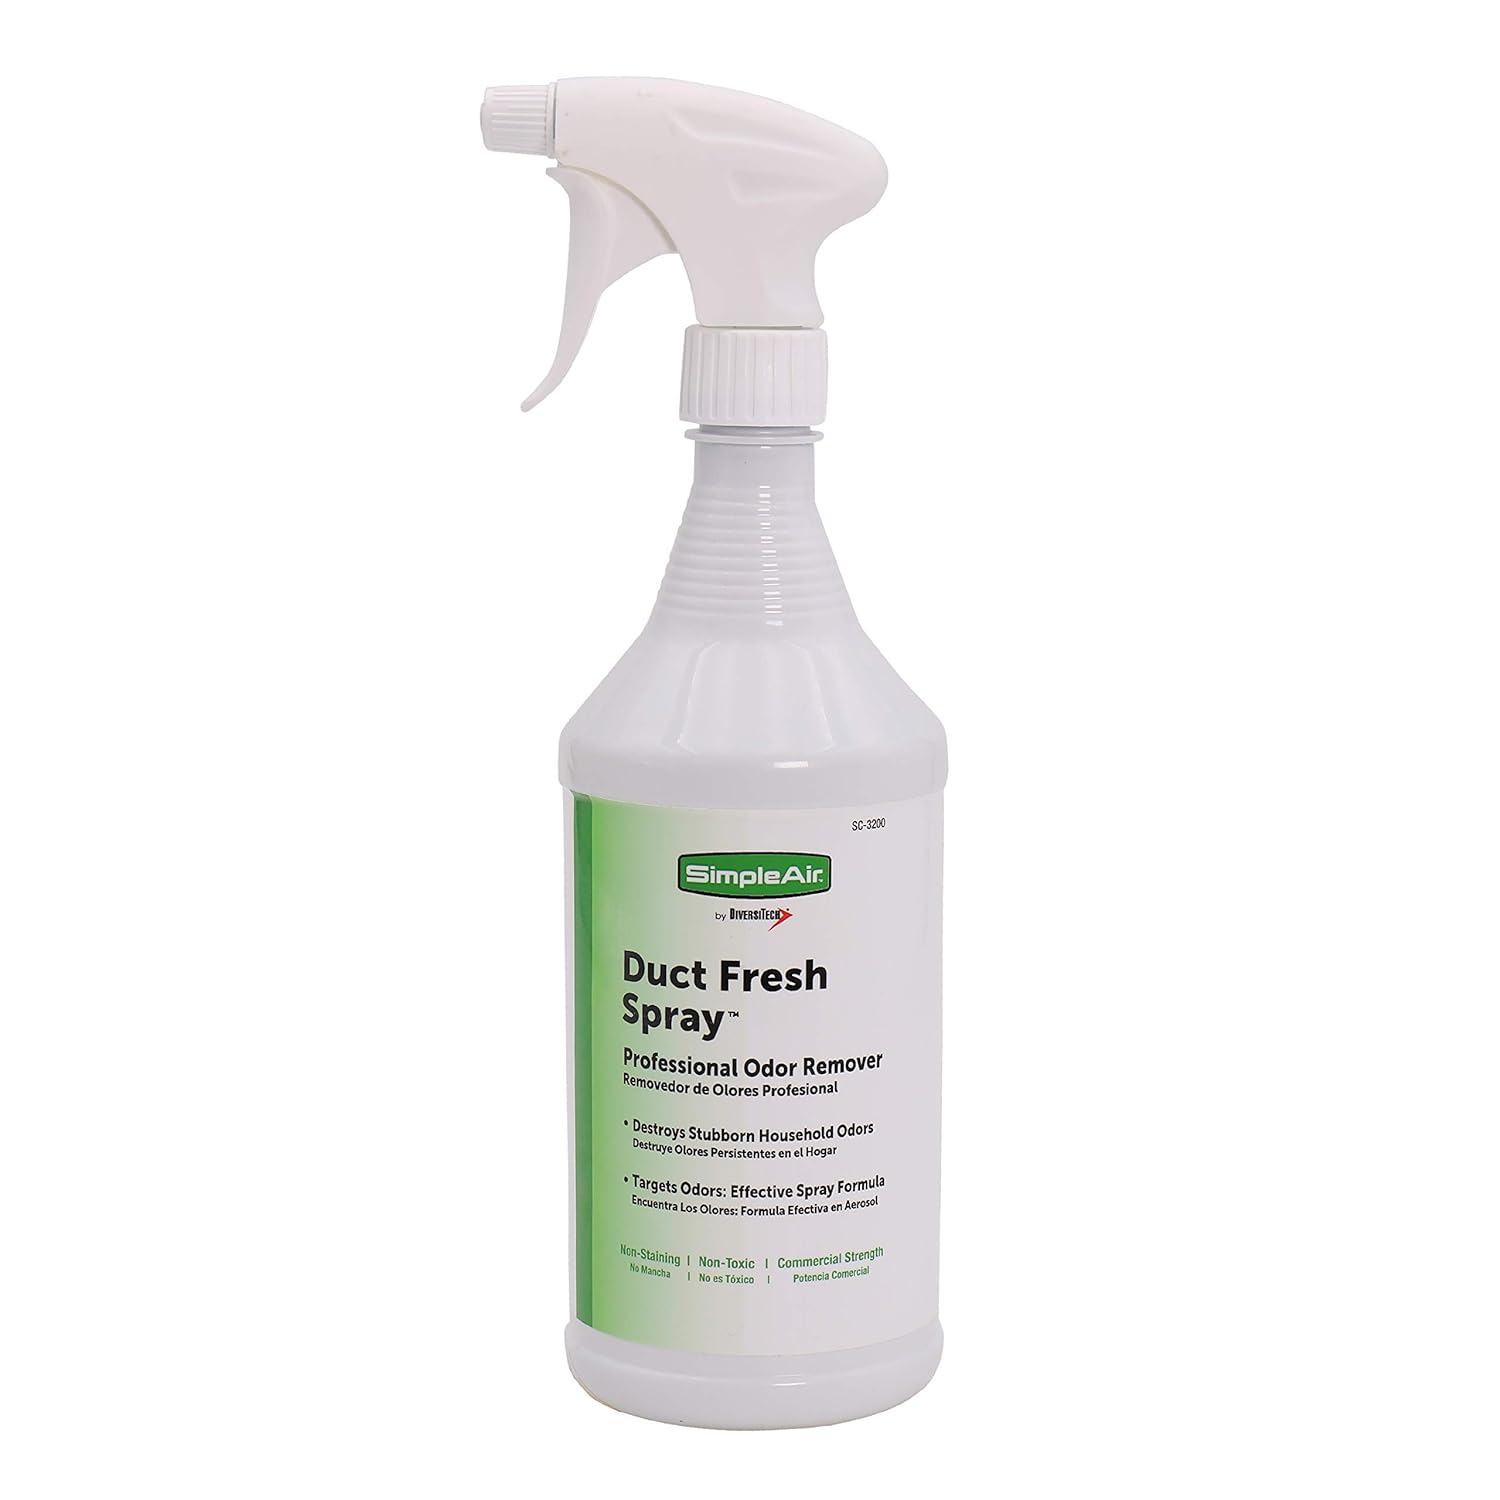 SC-3200 Duct Fresh Spray Air Freshener, Cleaner, Deodorizer Professional HVAC Home & Automotive Odor Remover, 32 Oz, Clear, 32 Fl Oz